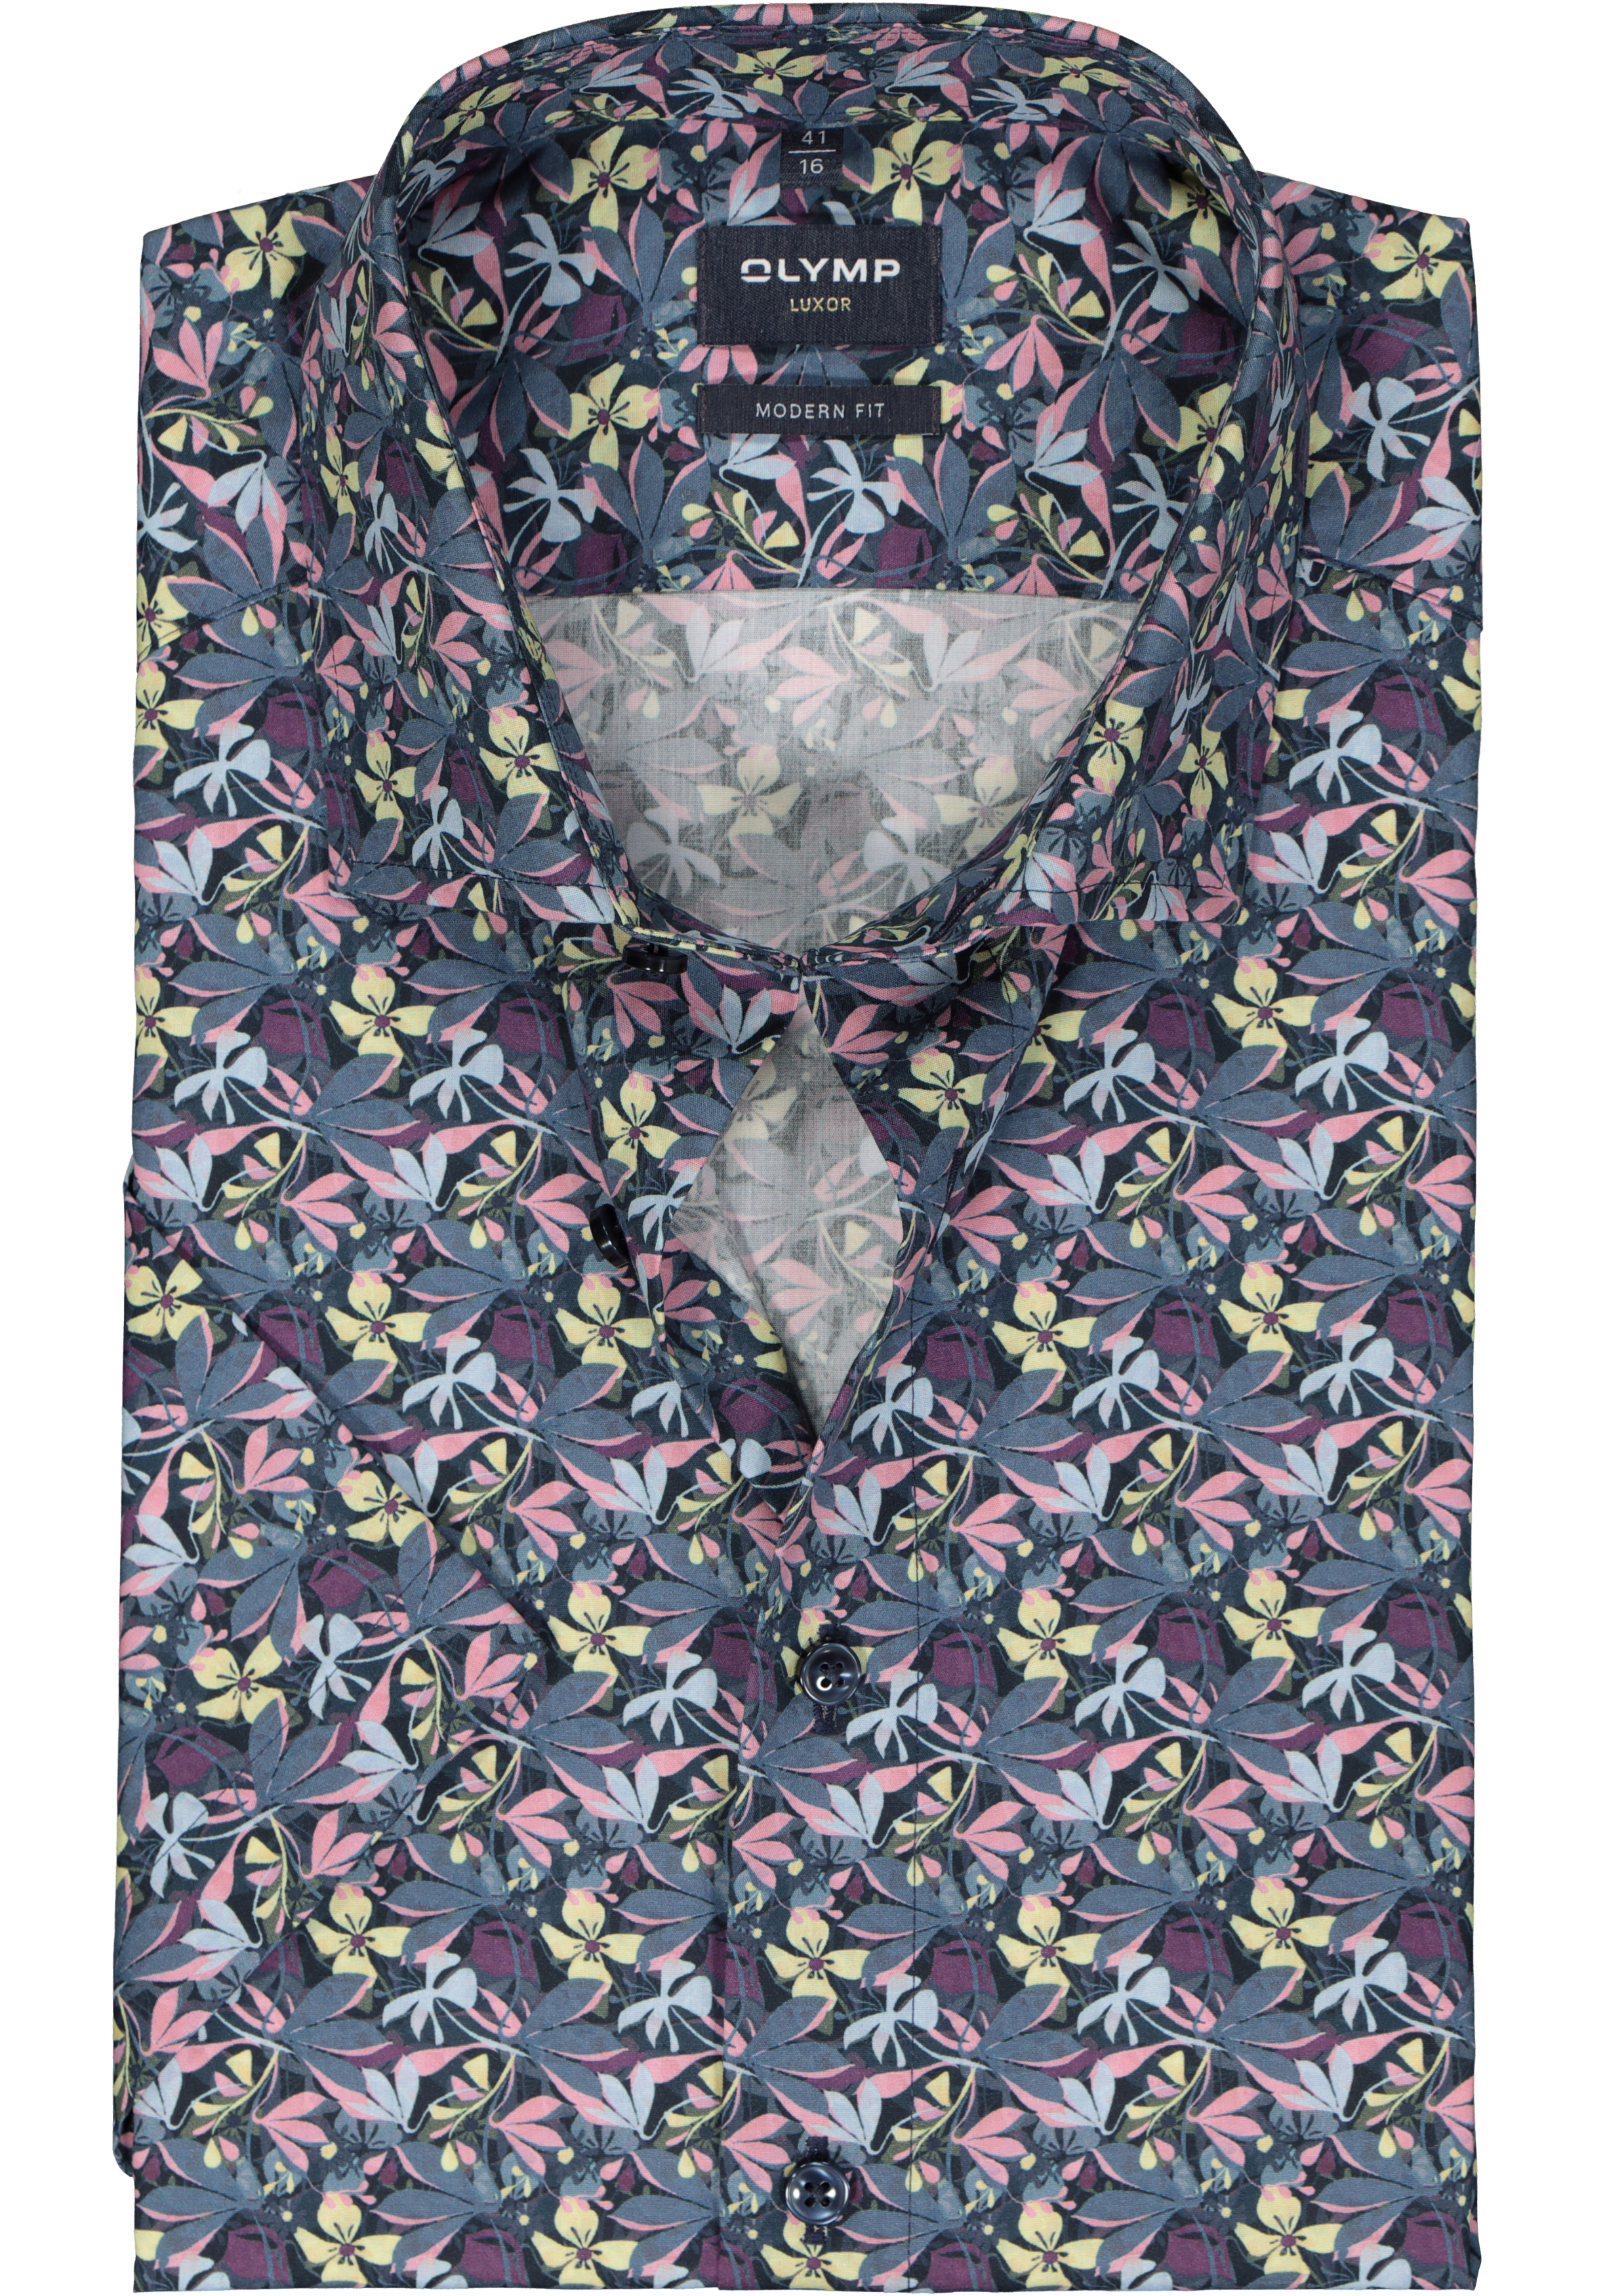 OLYMP modern fit overhemd, korte mouw, popeline, grijs met geel en roze dessin